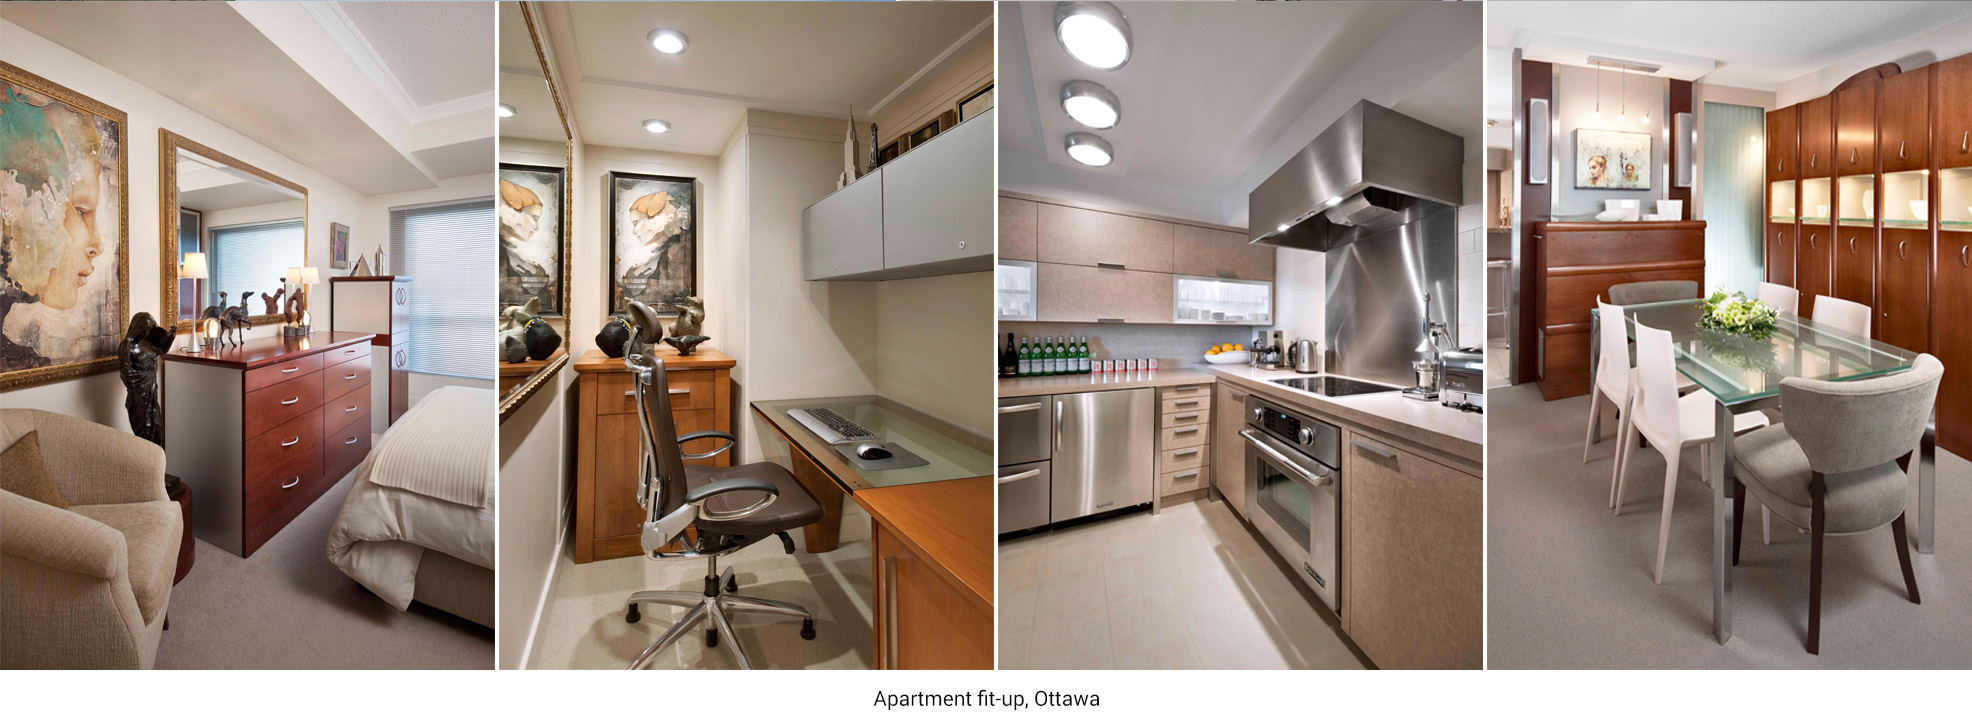 Apartment fit-up, Ottawa